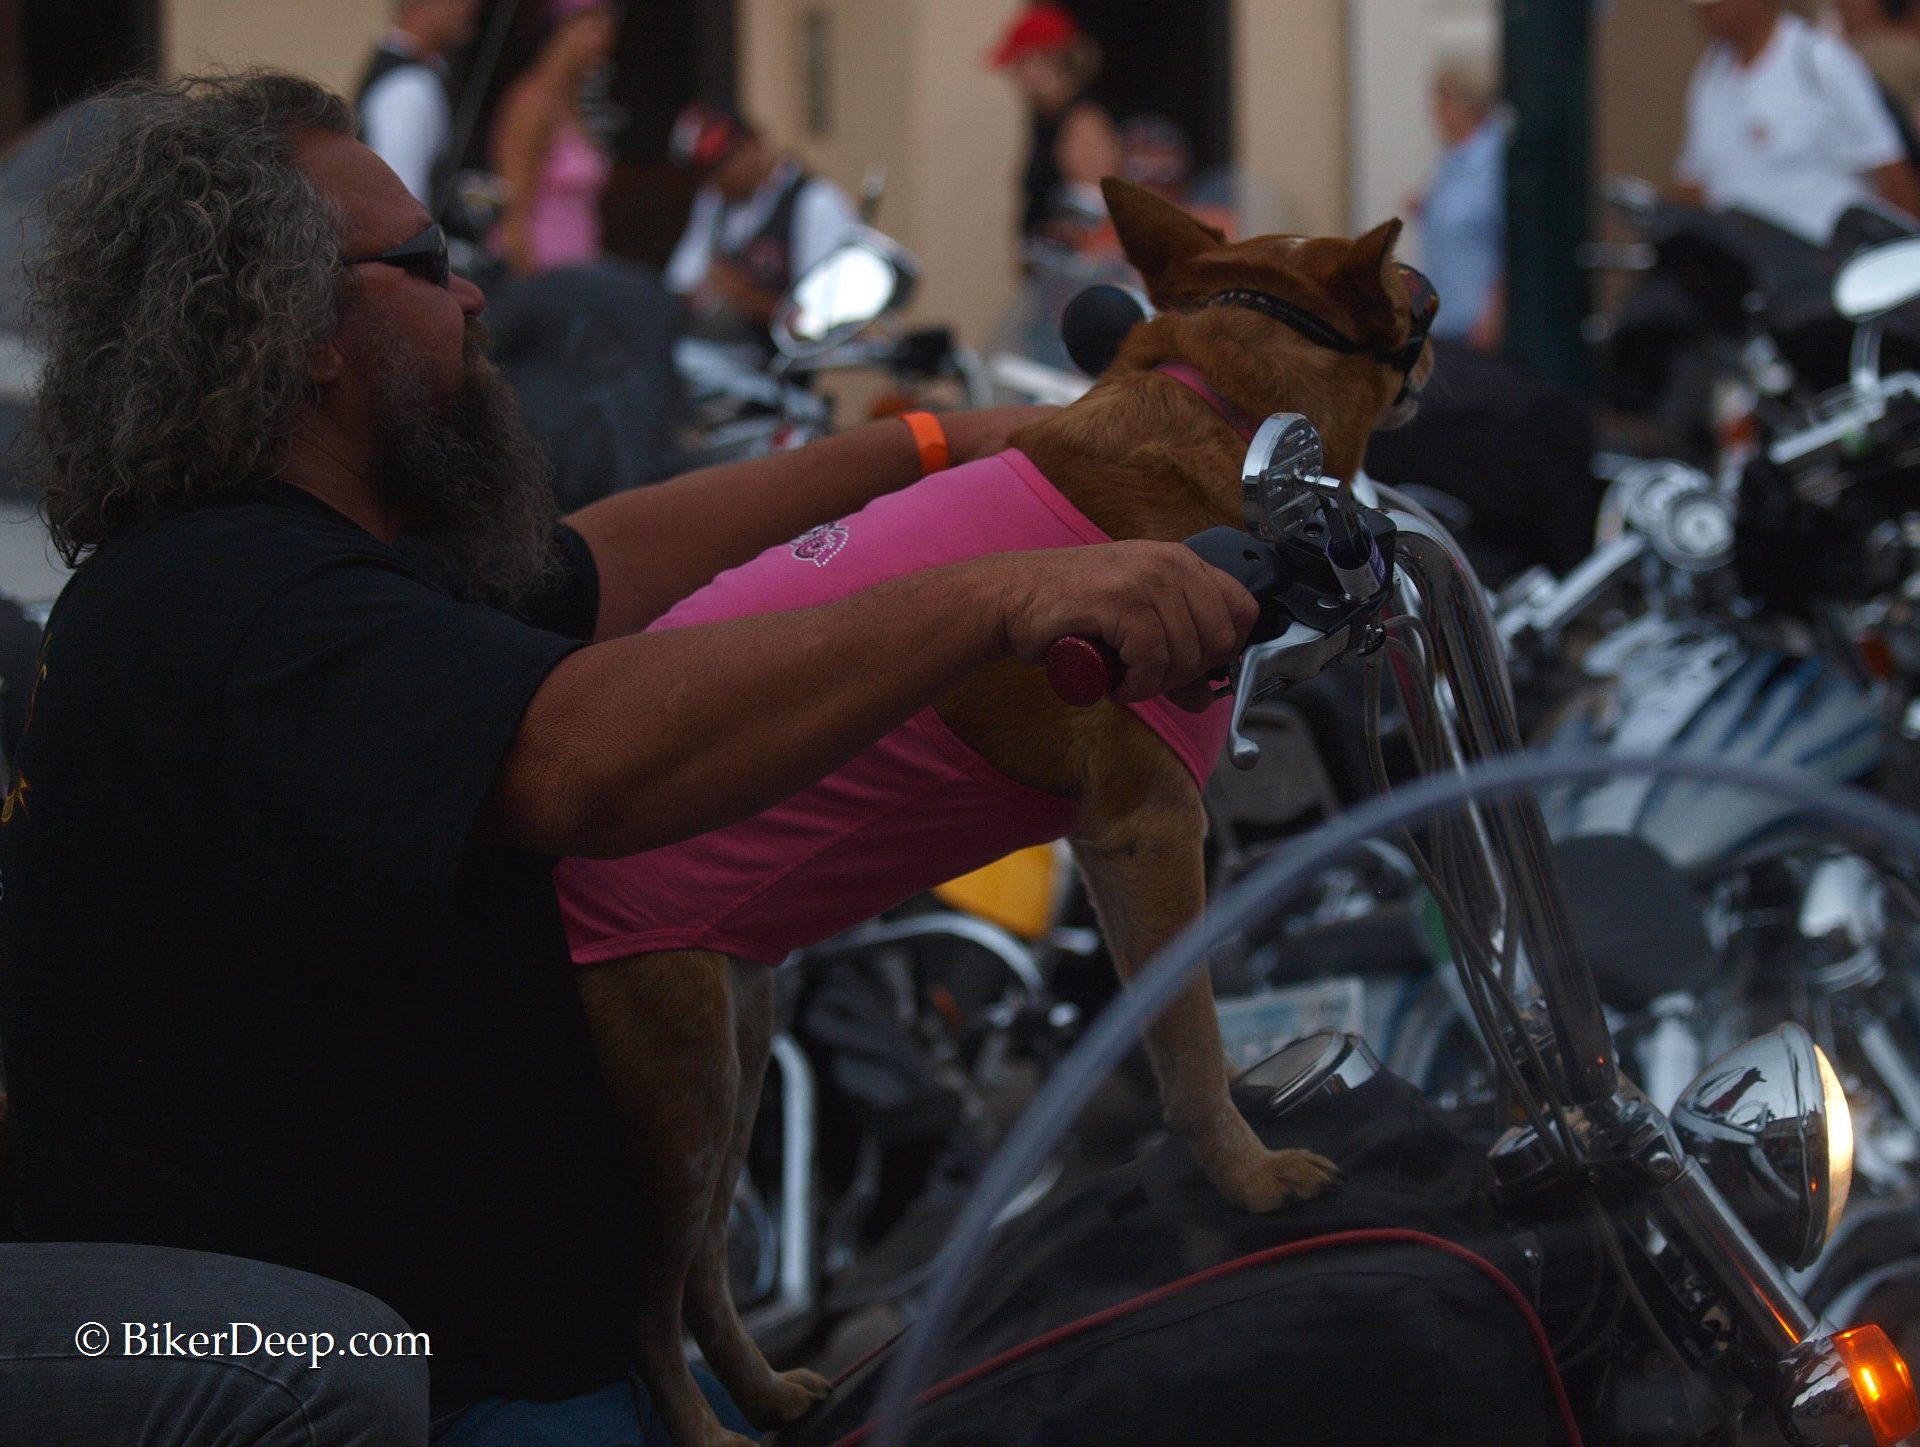 Dog on motorcycle